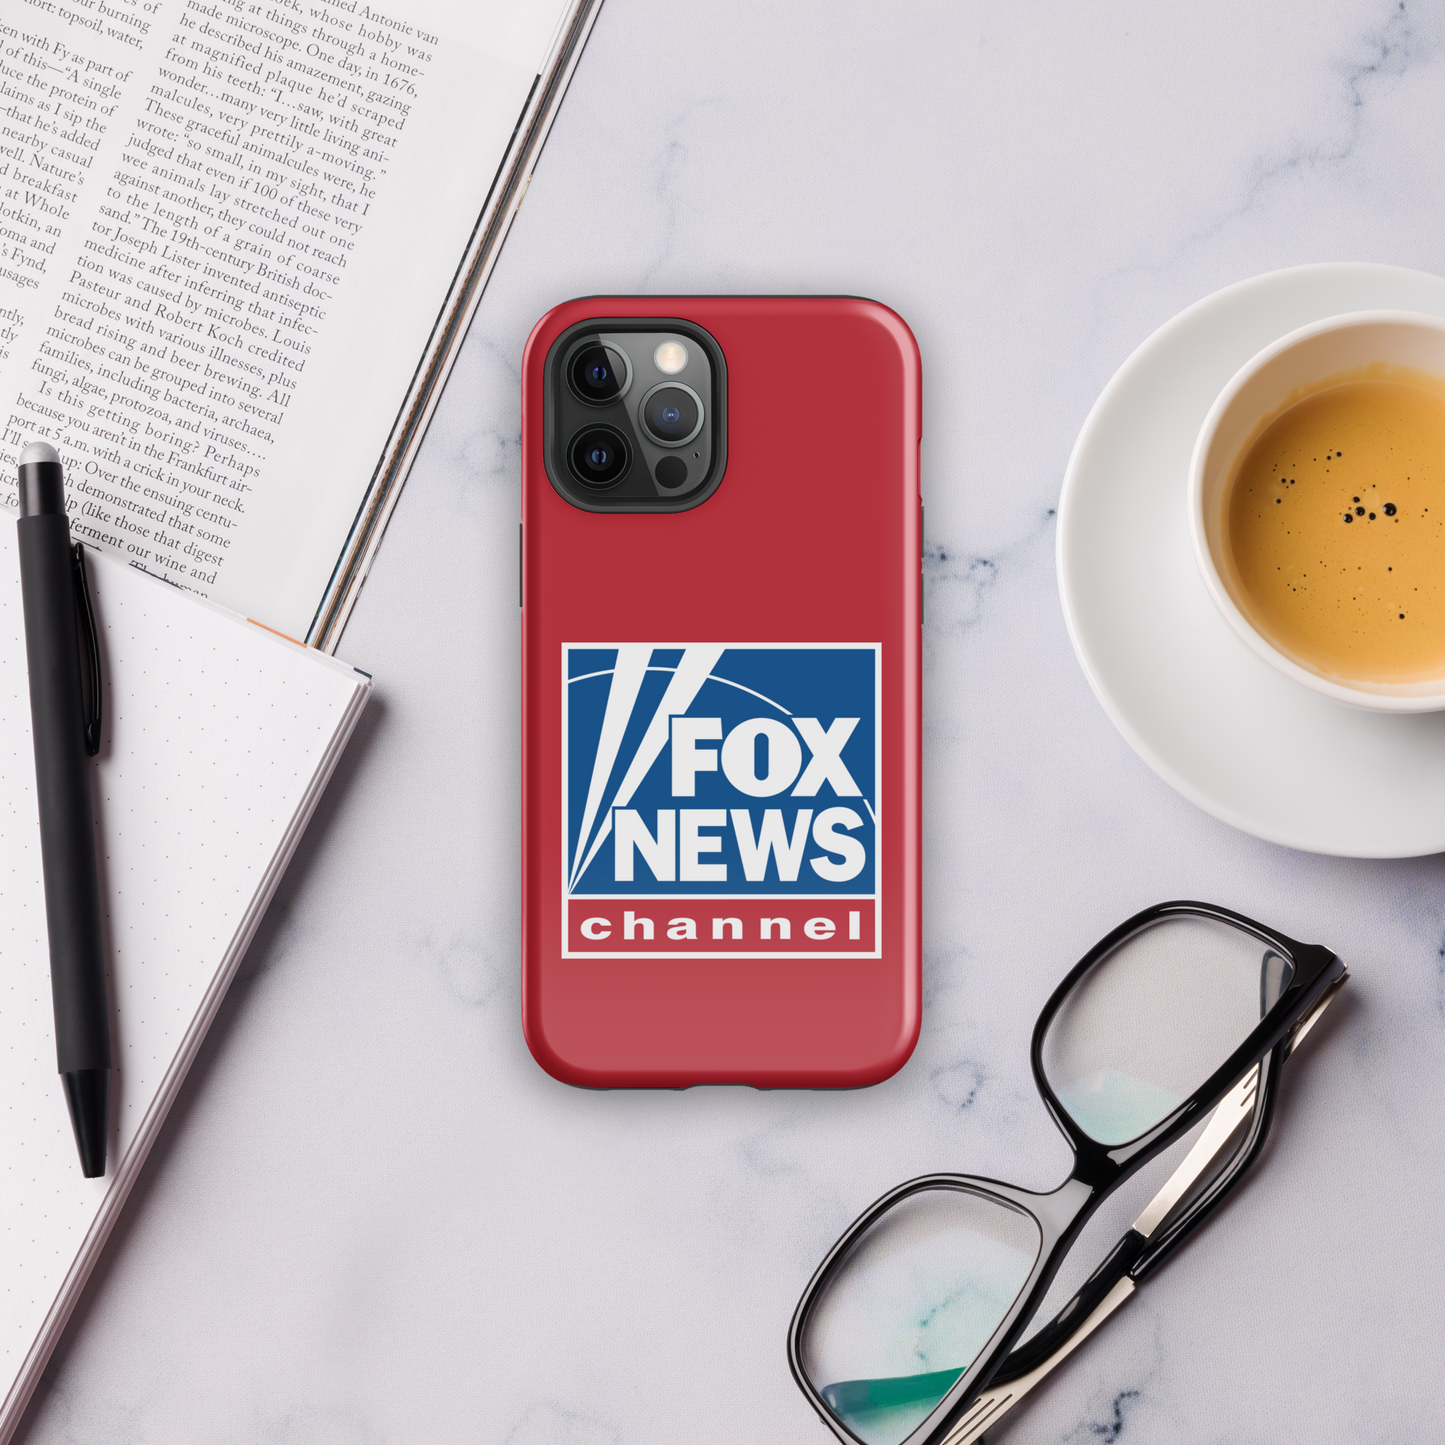 Fox News Logo Red Tough Phone Case - iPhone